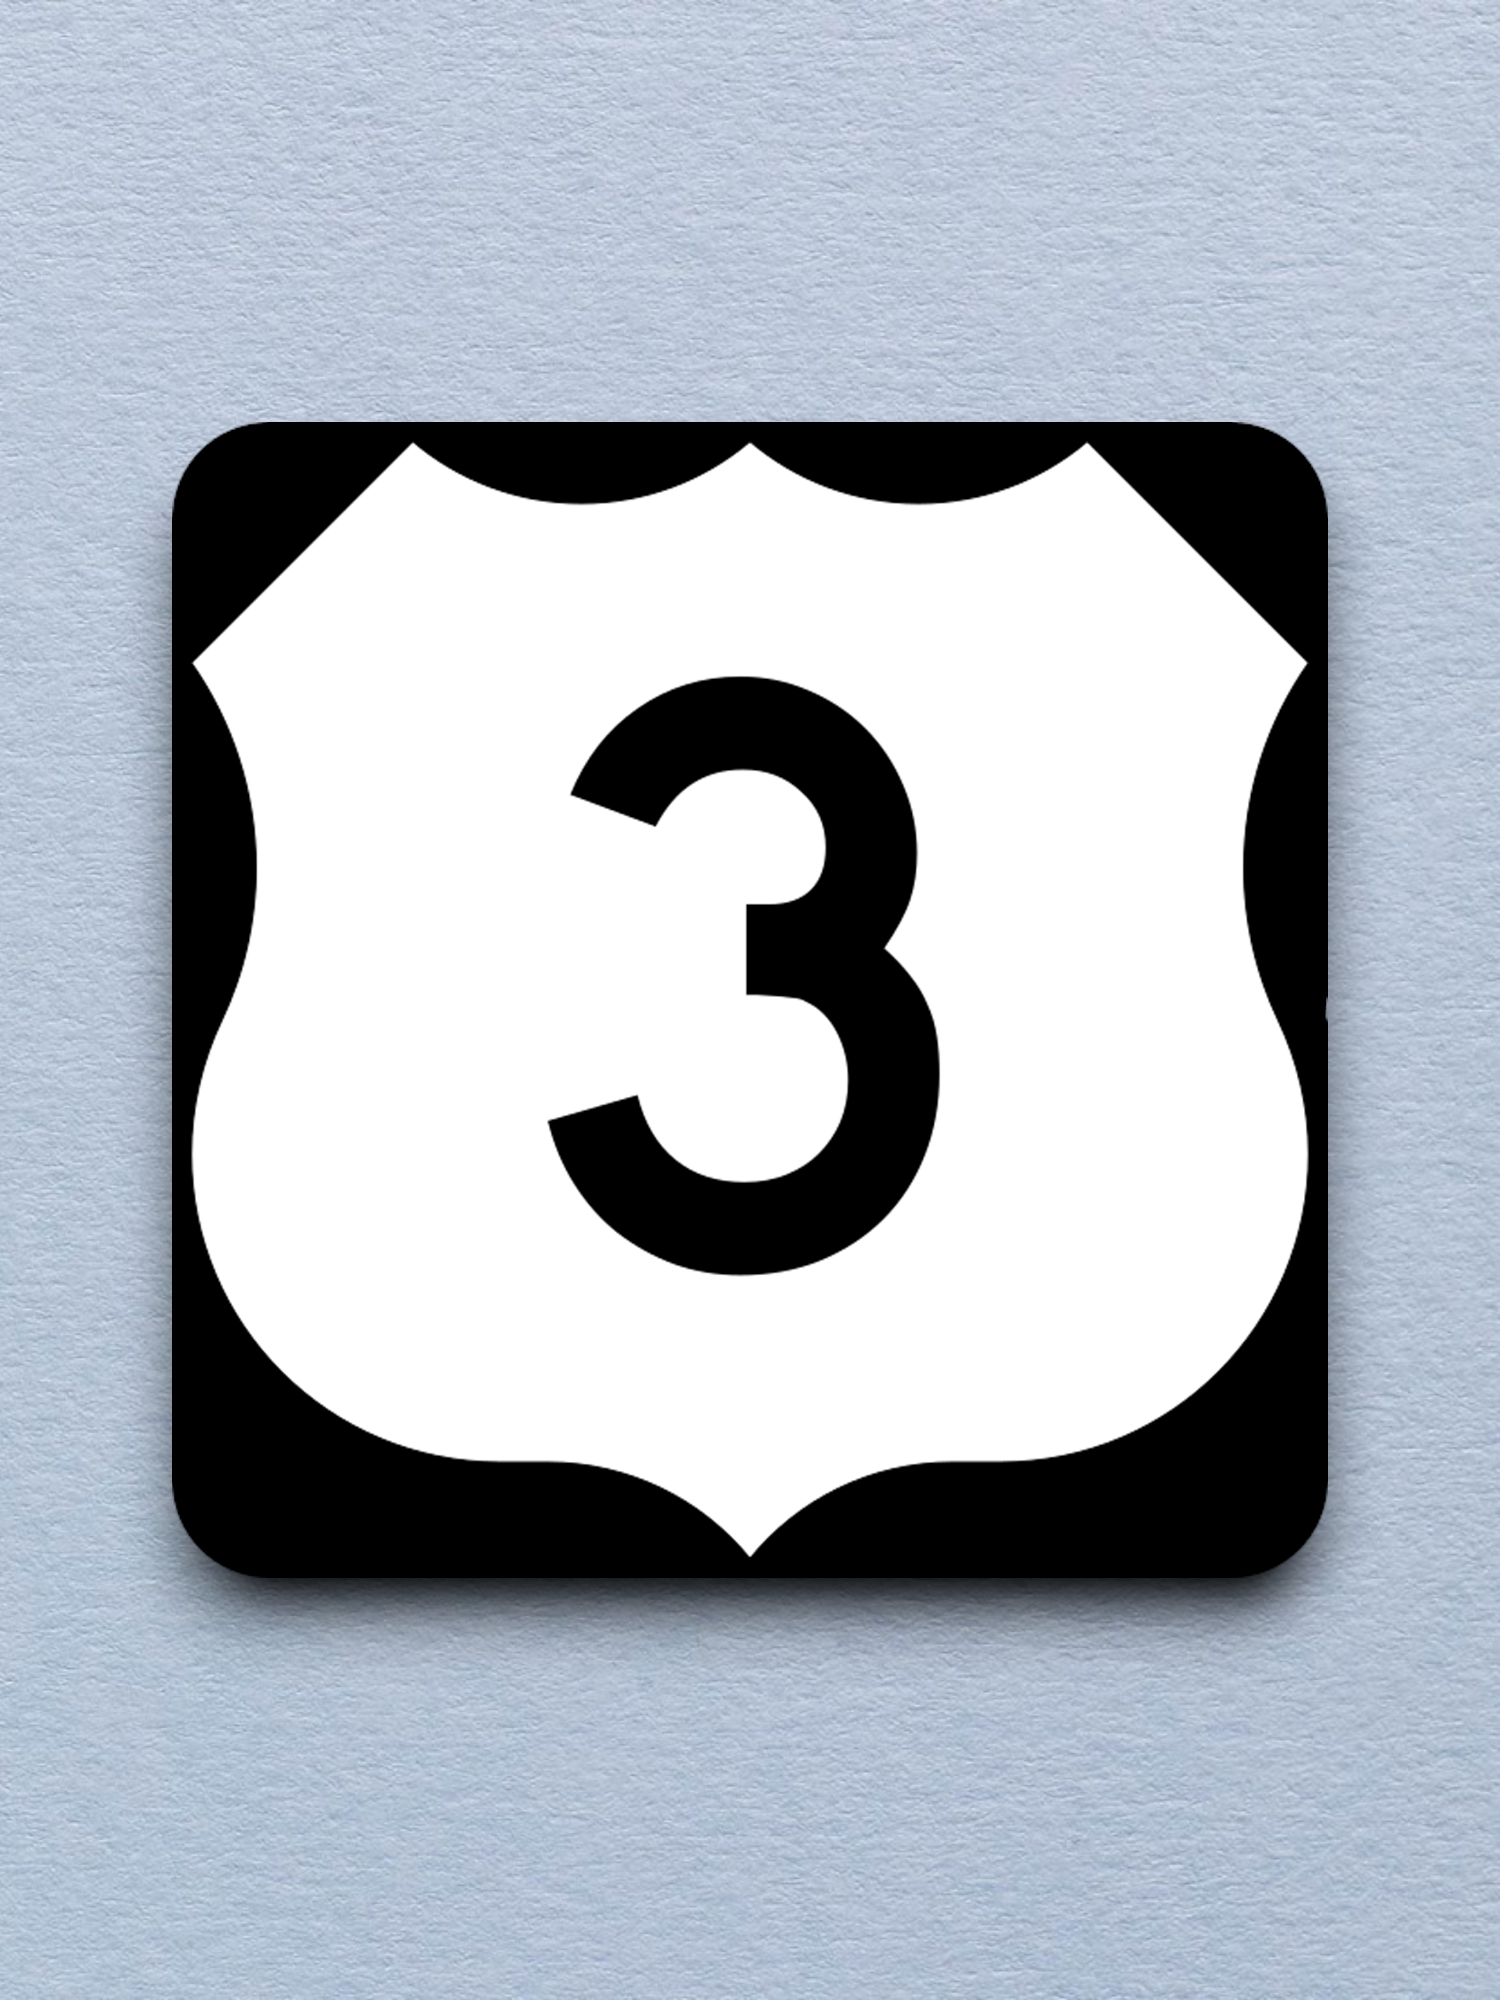 U.S. Route 3 Road Sign Sticker